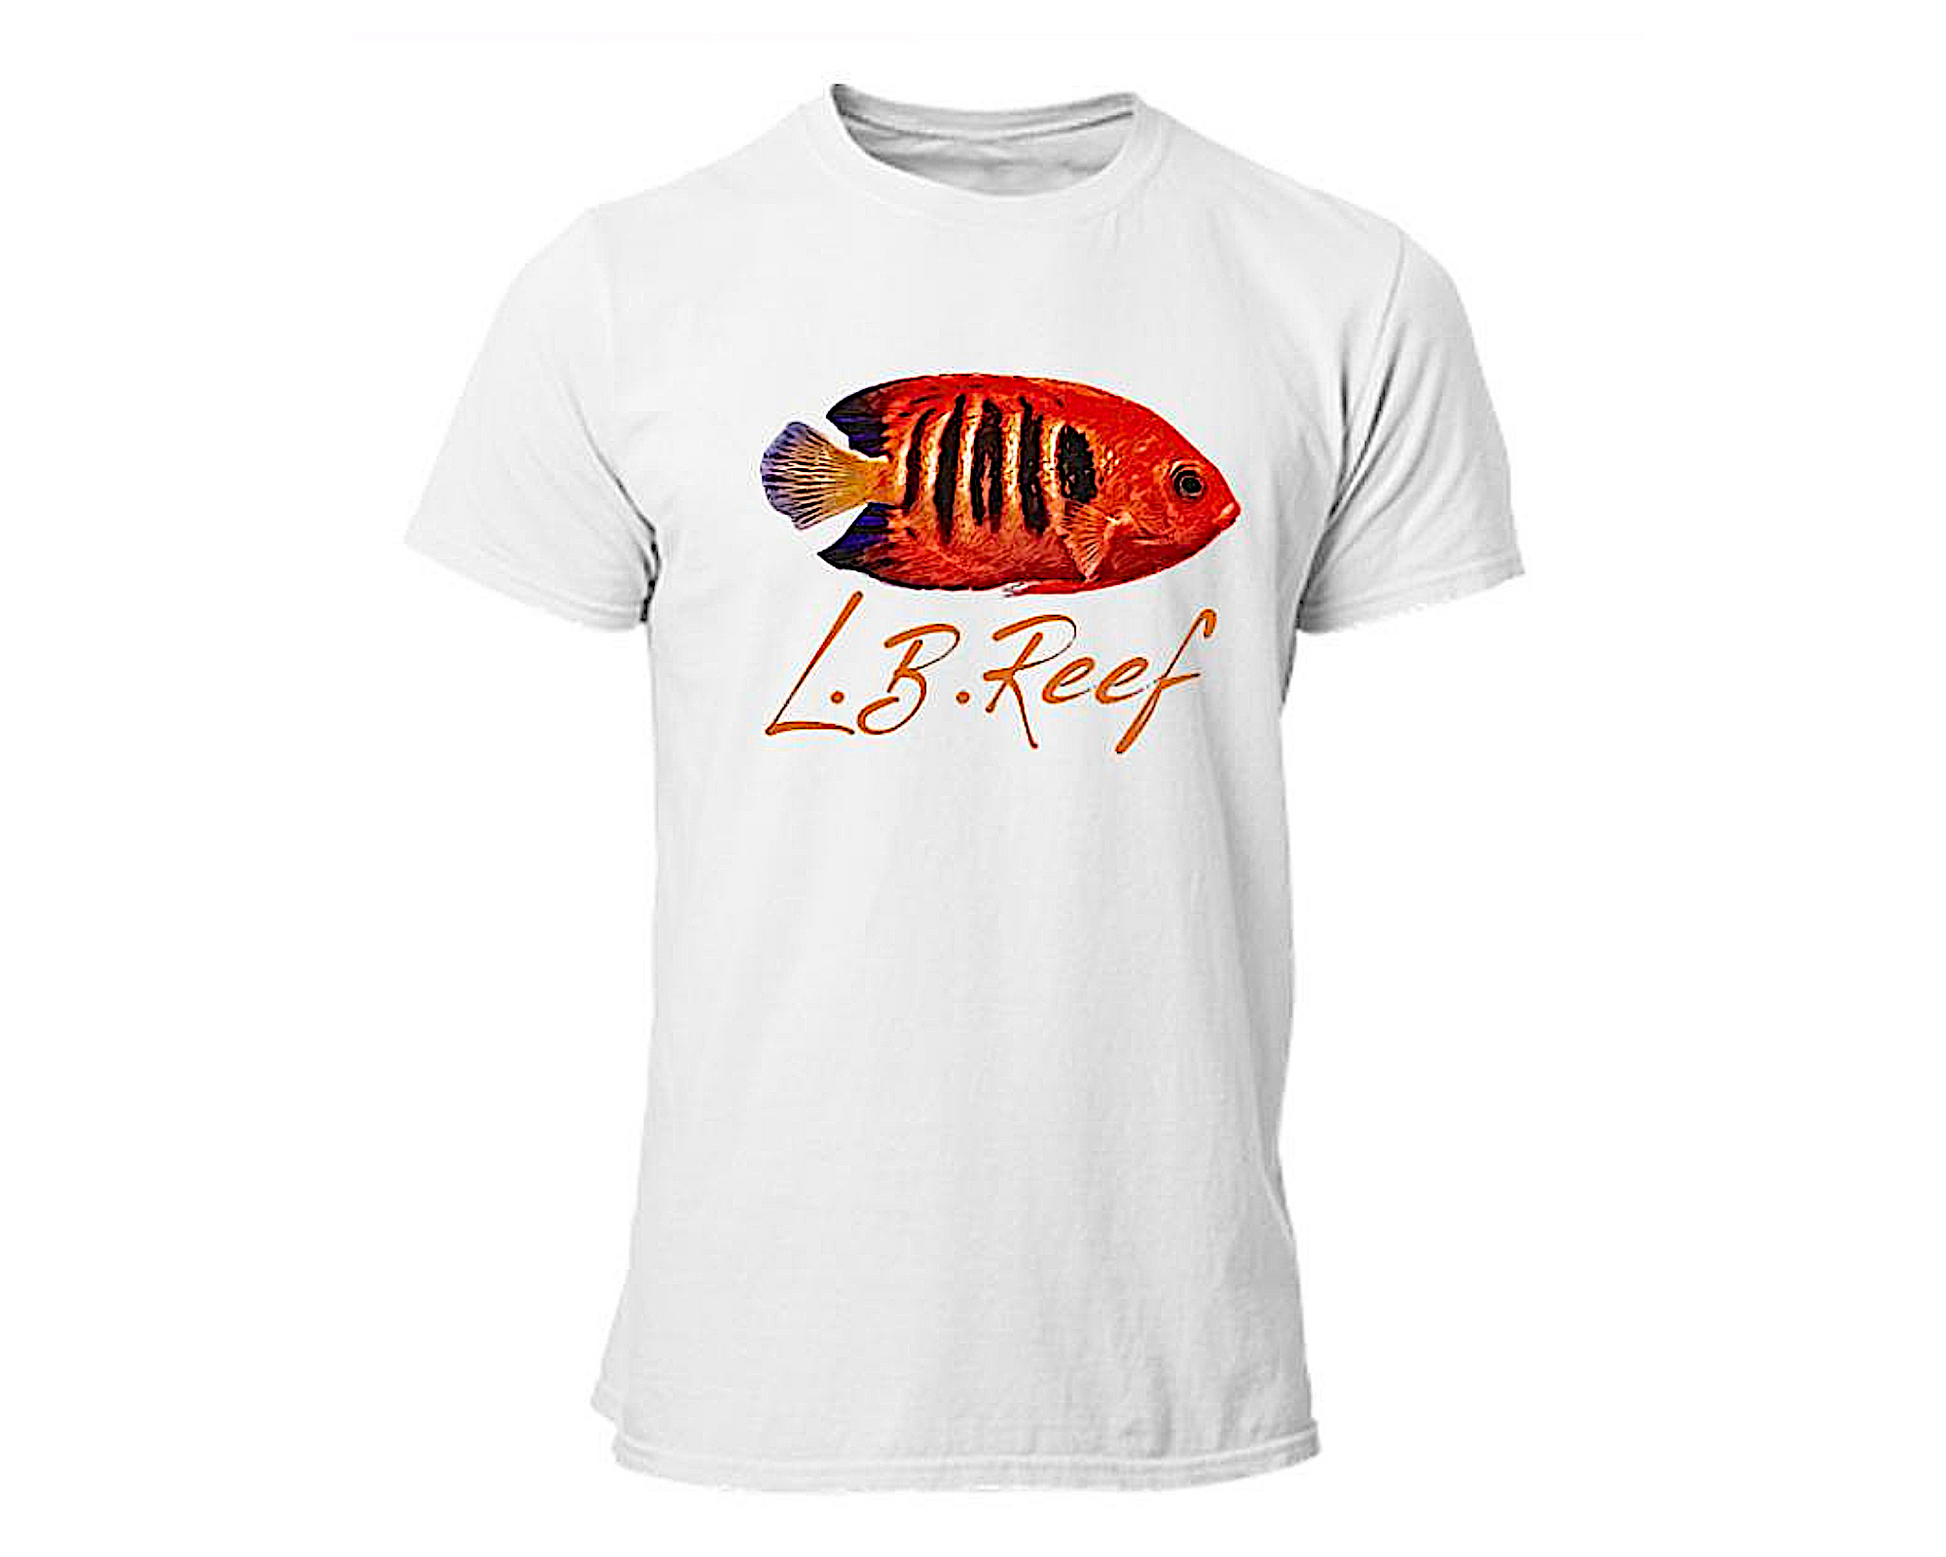 L.B. Reef - T-Shirt Bianca "C.loriculus painted" - L.B.Reef